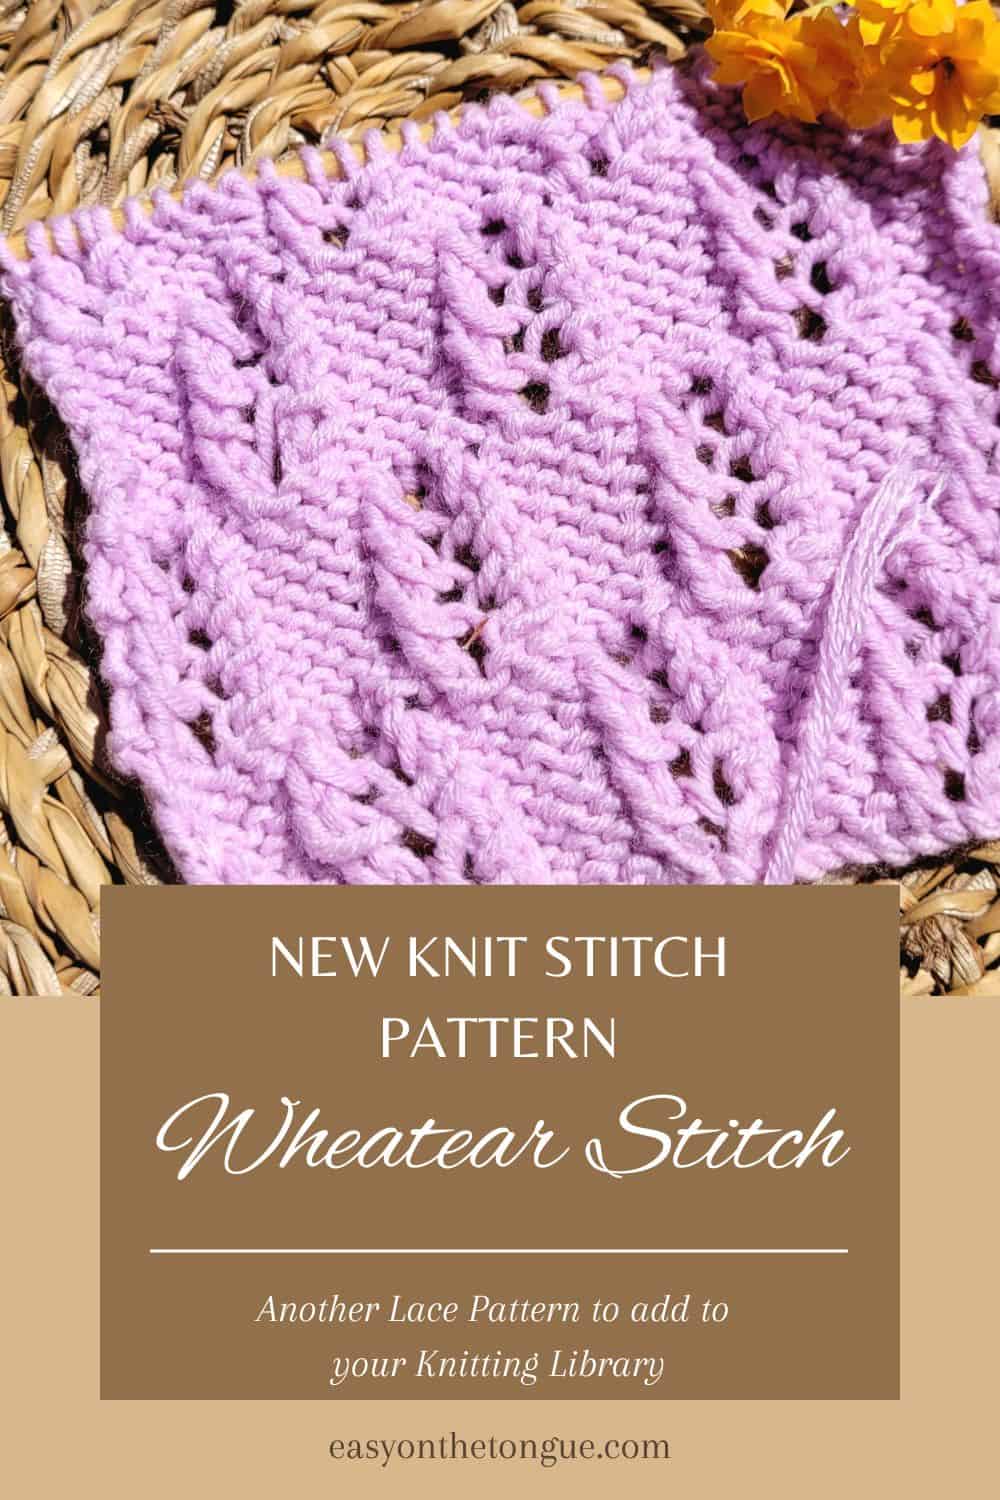 How to Knit Wheatear Stitch Pattern, A Textured Lace Stitch